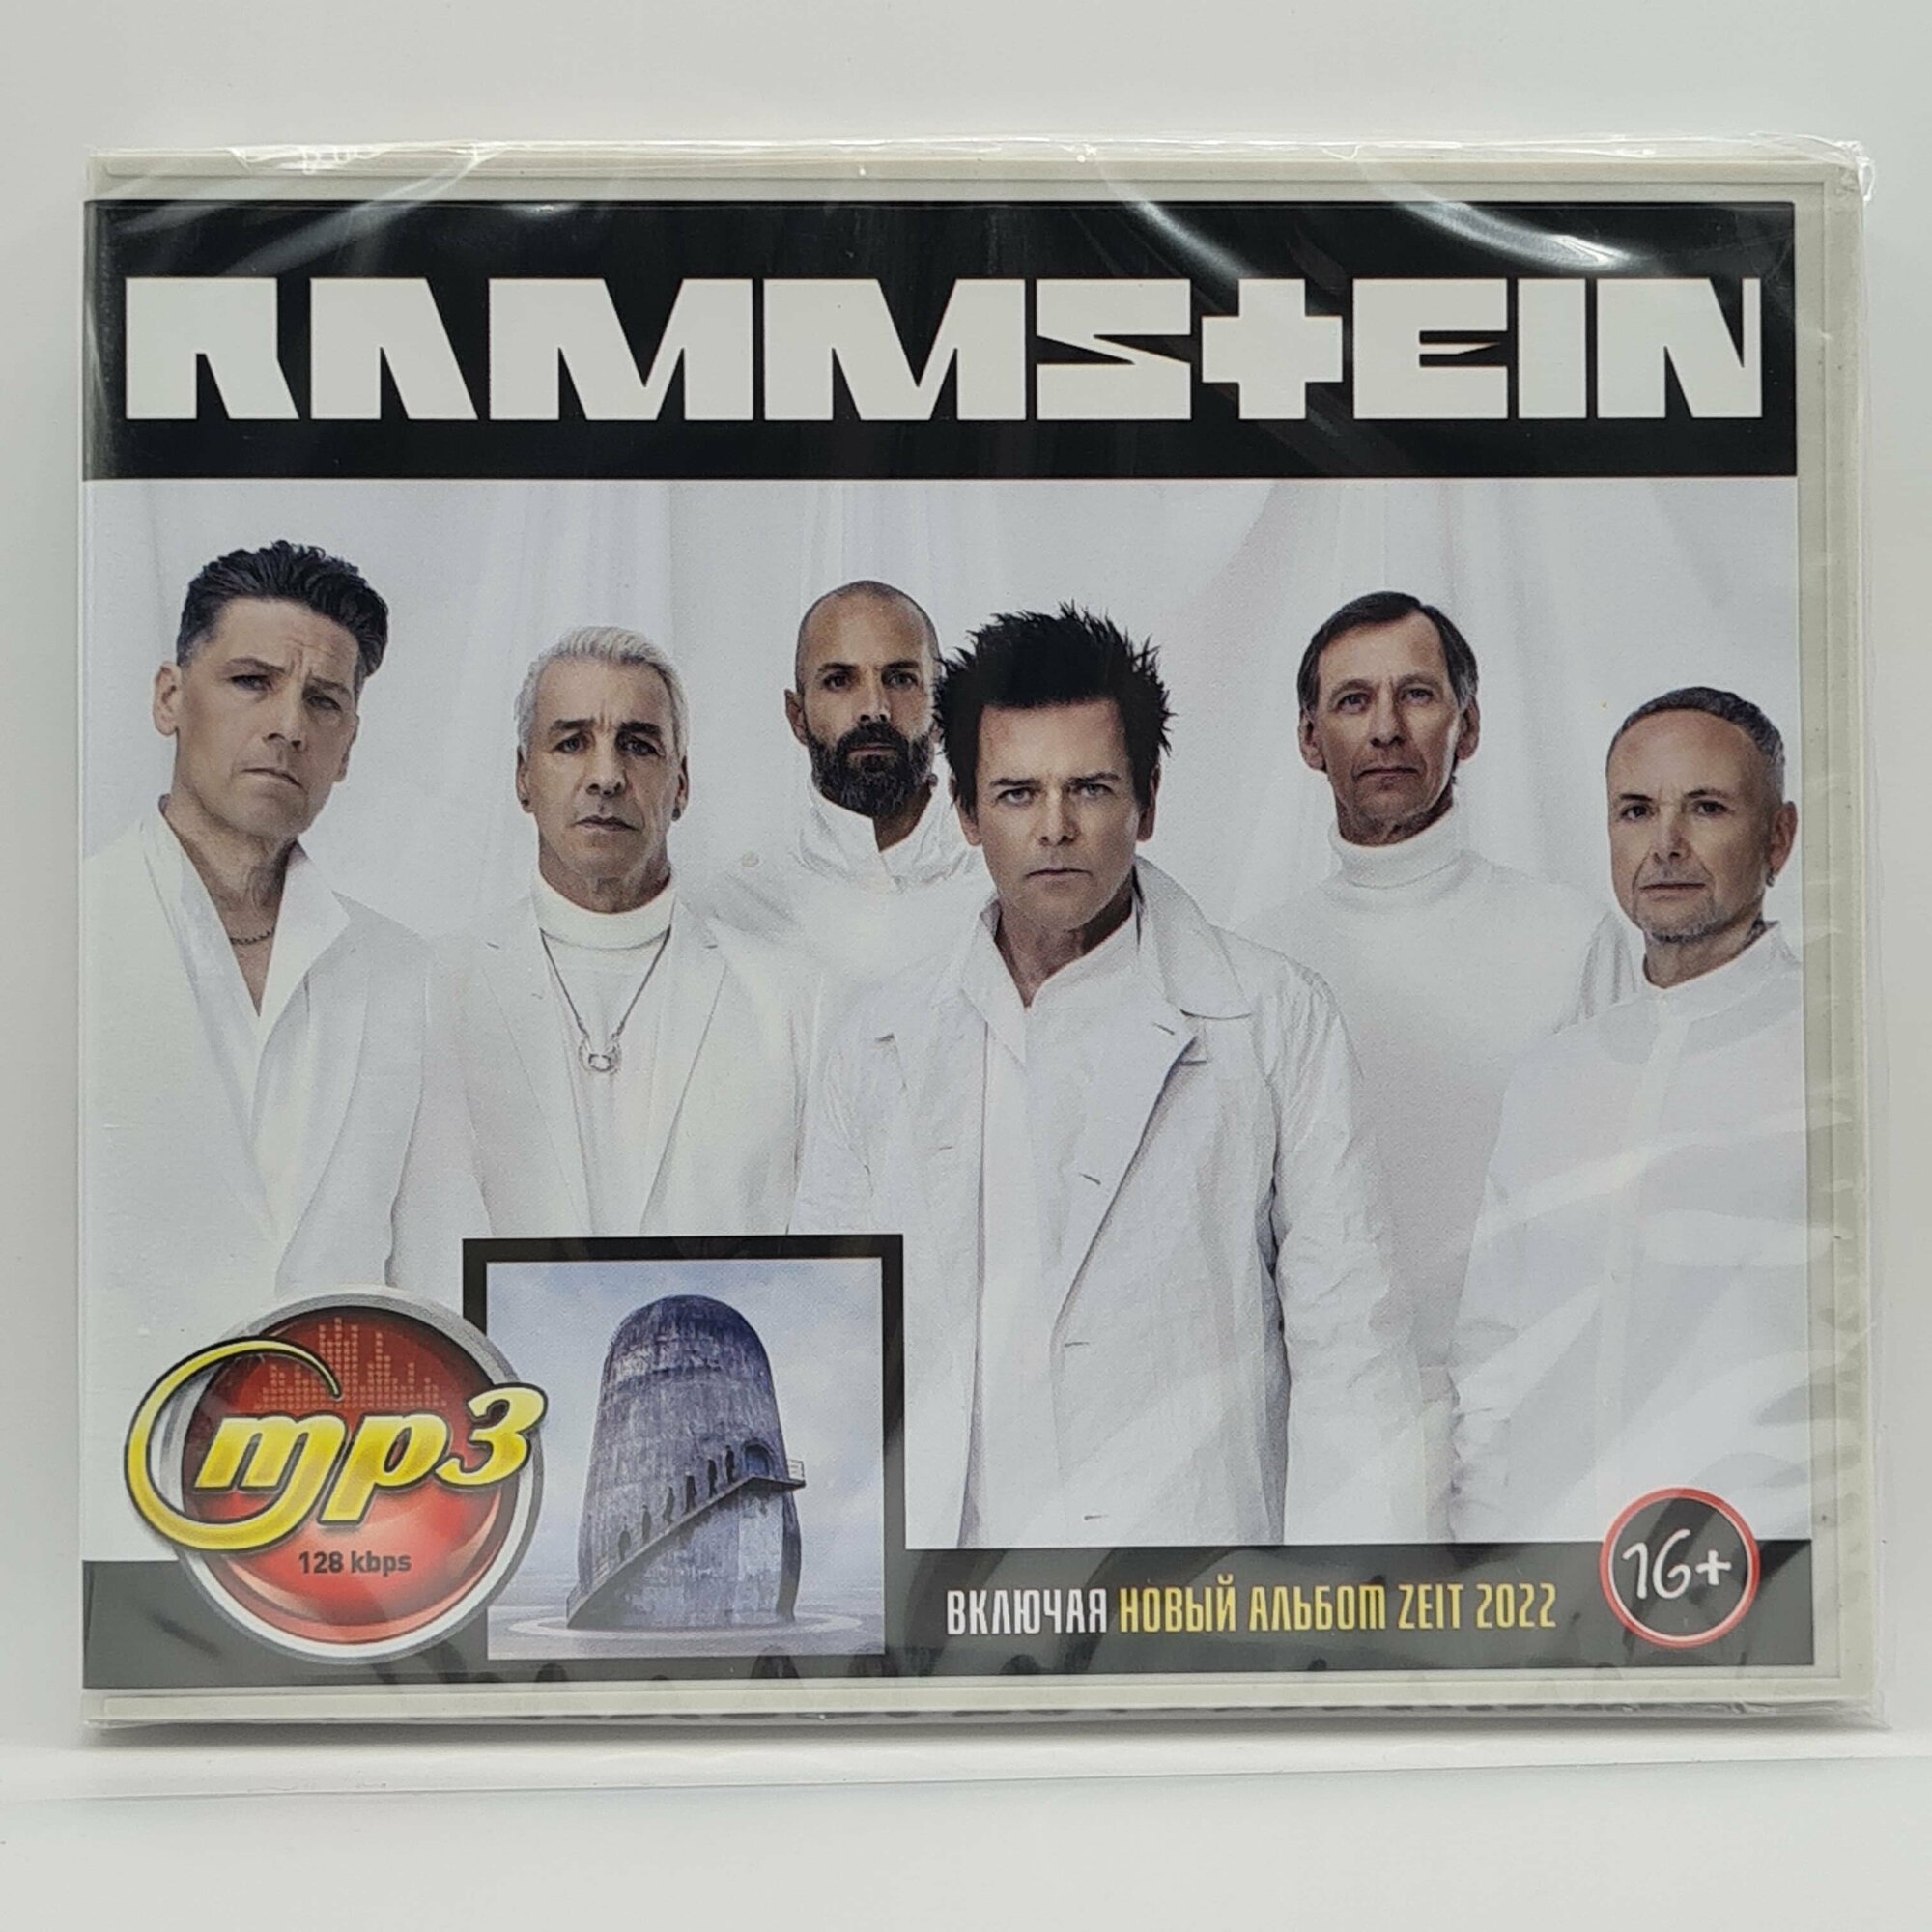 Rammstein (MP3)